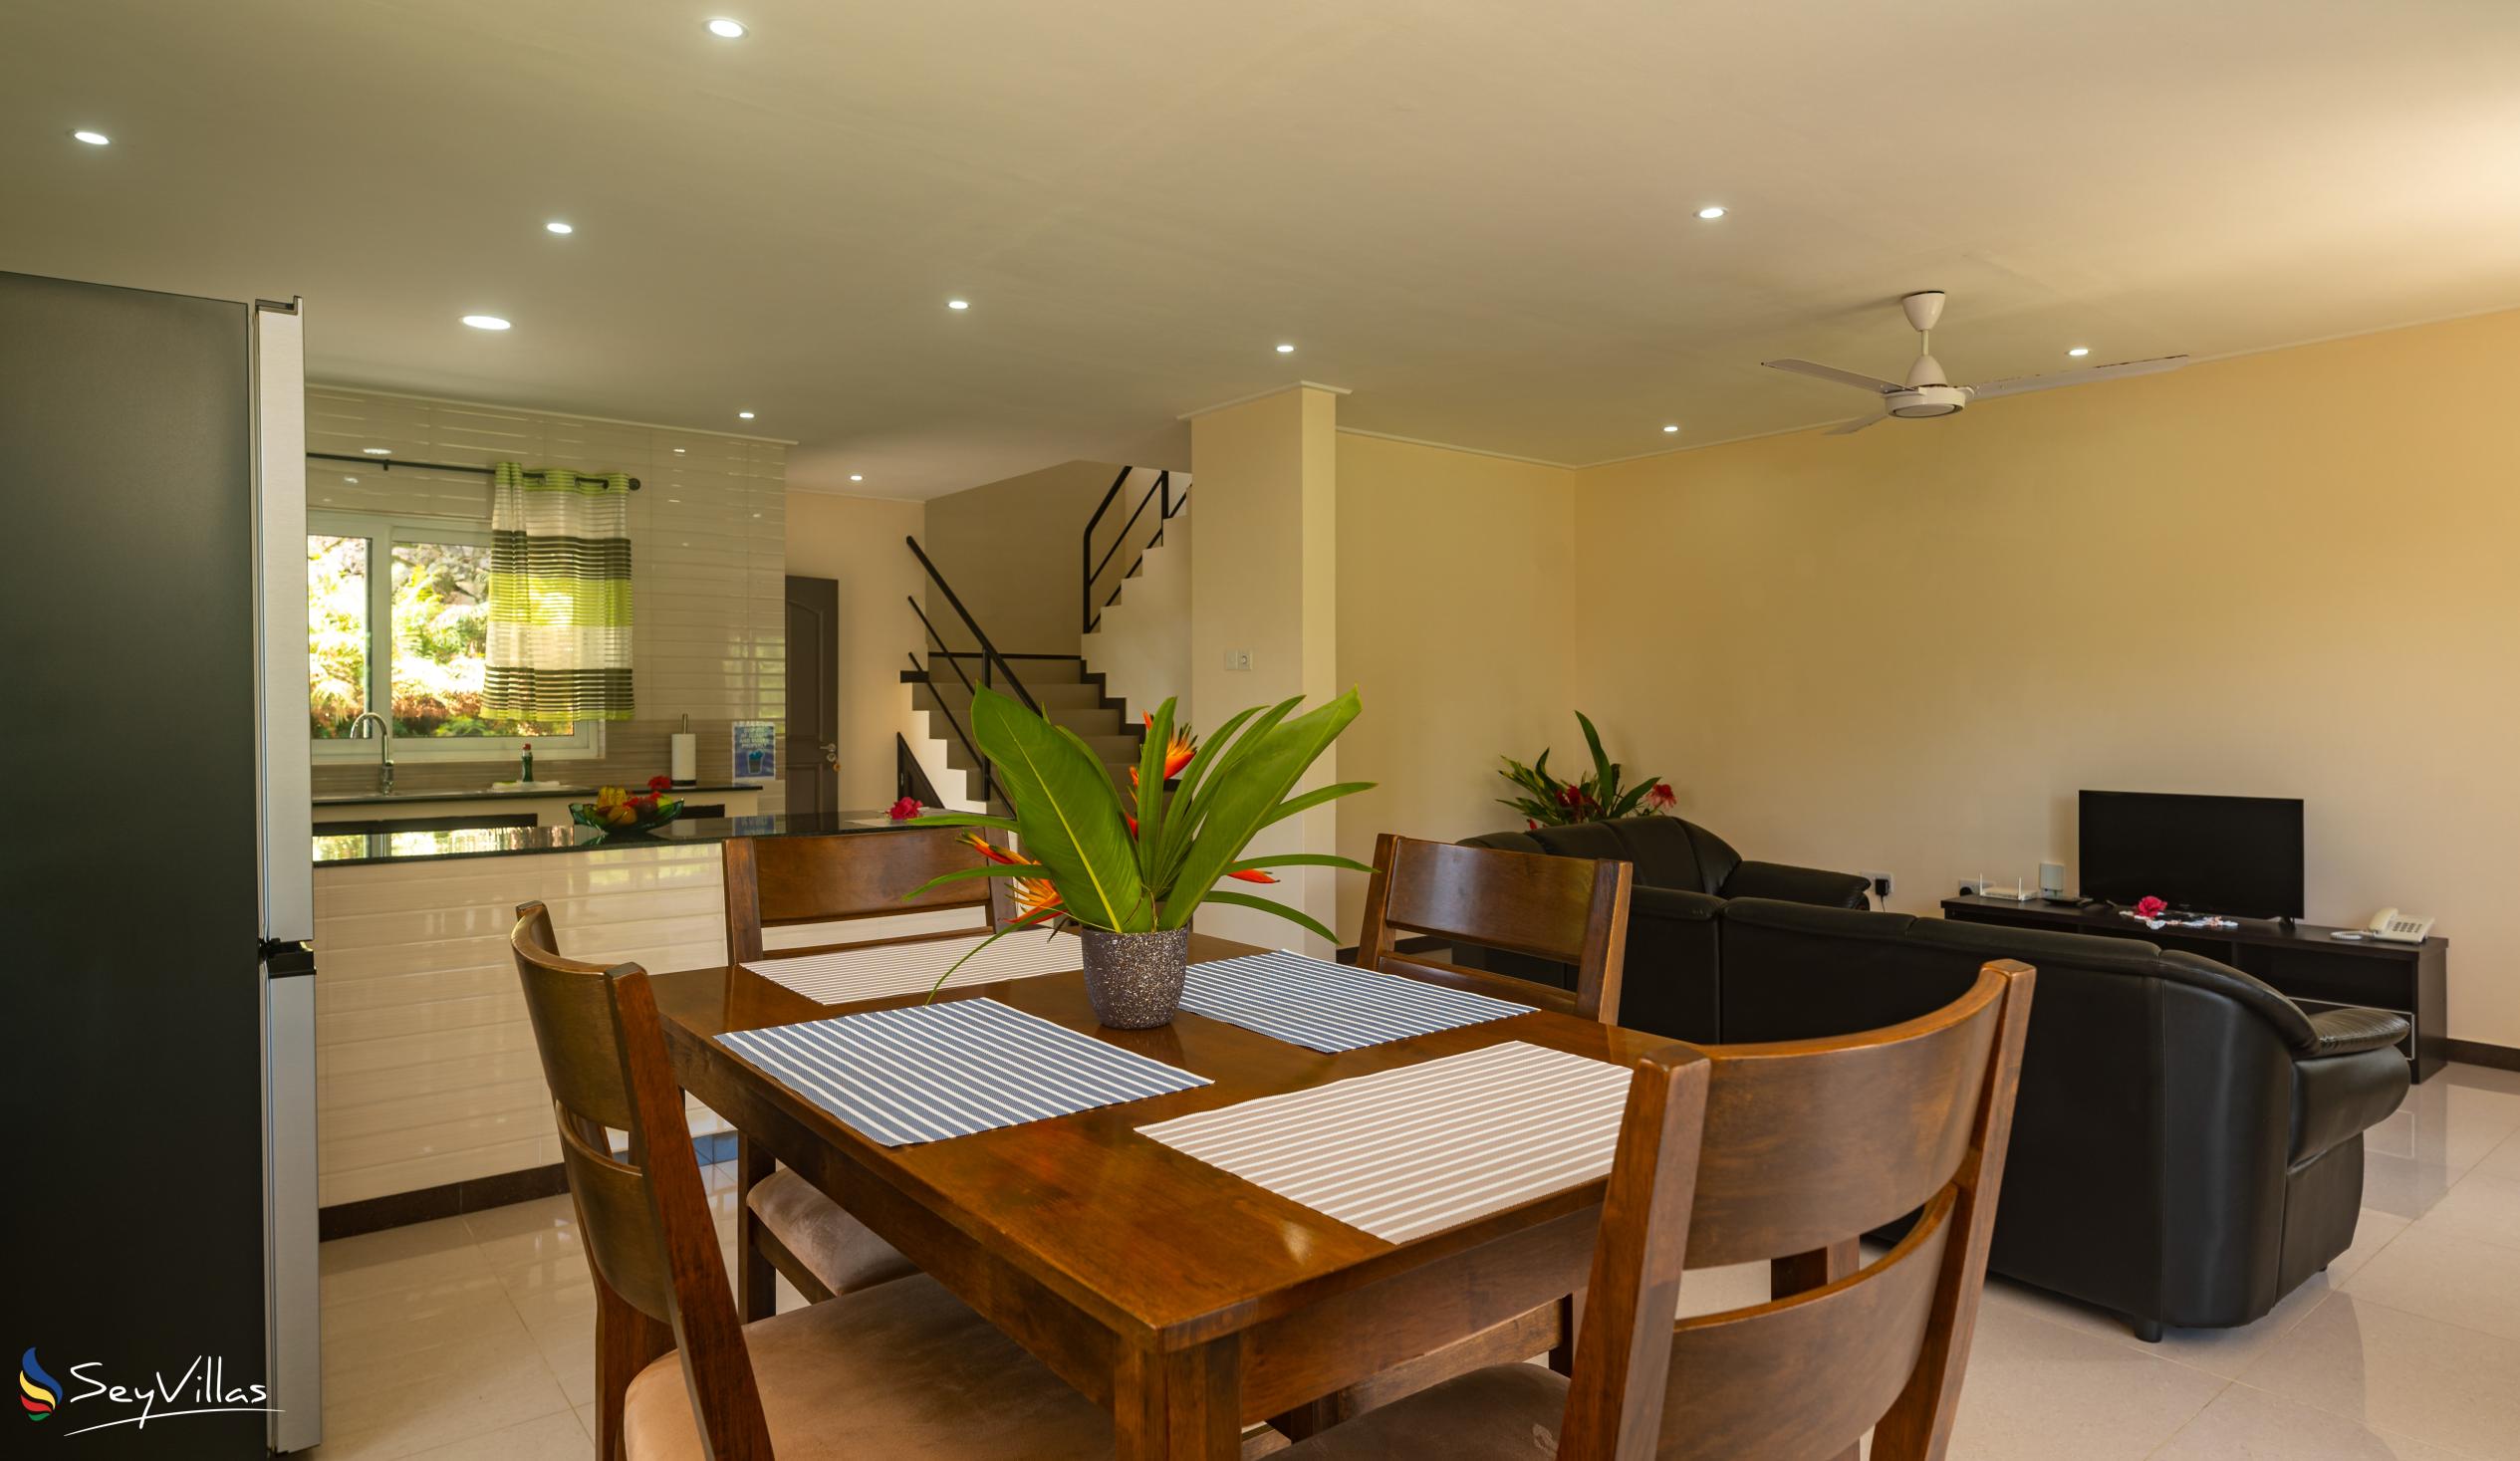 Photo 42: JAIDSS Holiday Apartments - 2-Bedroom Apartment - Mahé (Seychelles)